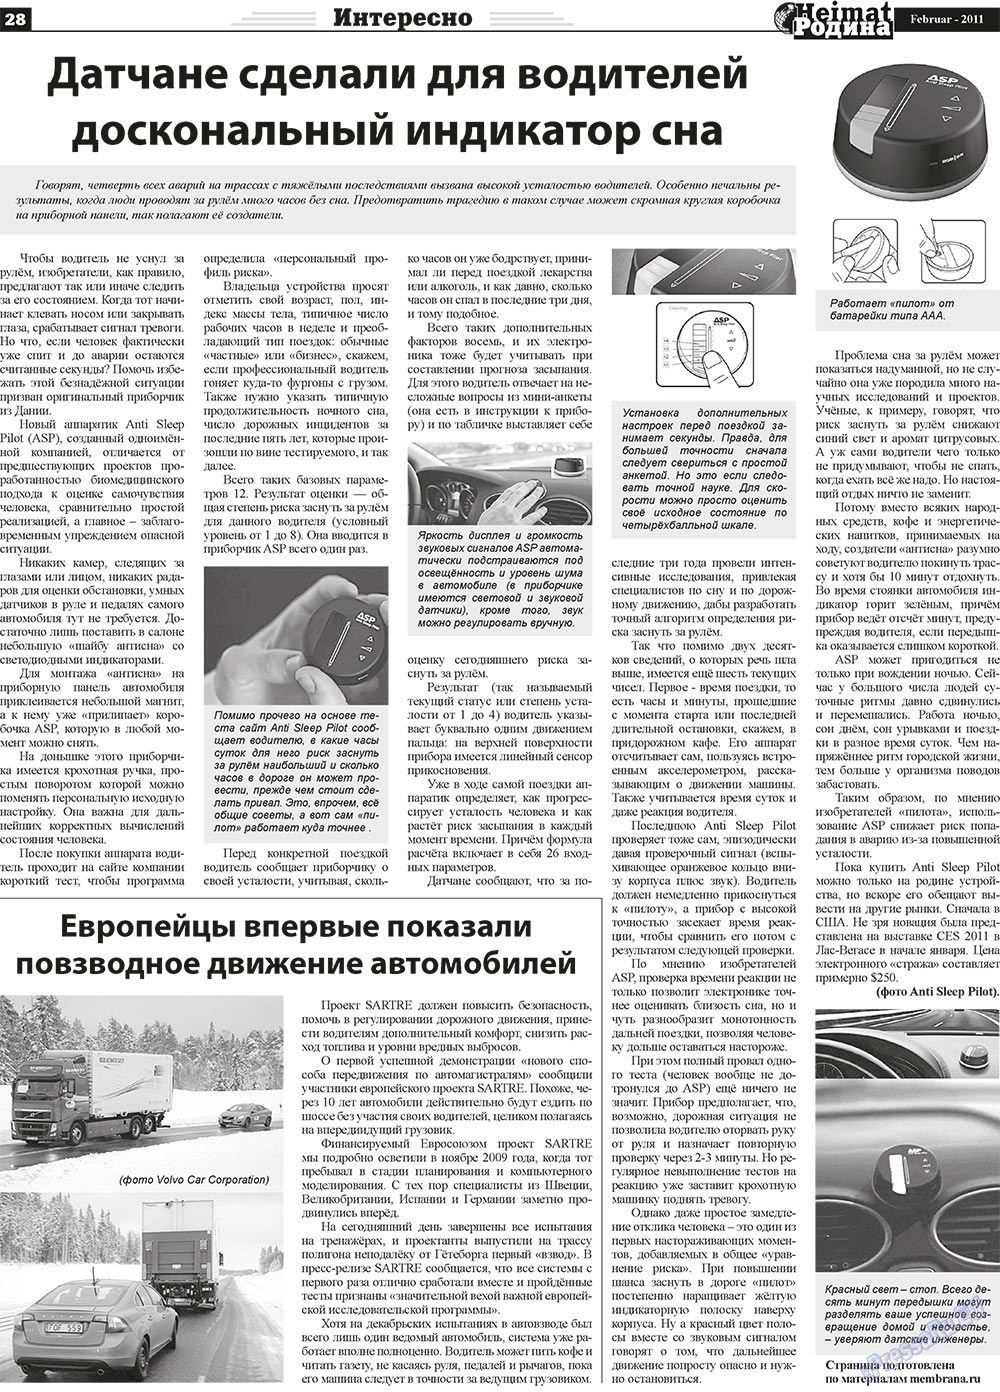 Heimat-Родина, газета. 2011 №2 стр.28